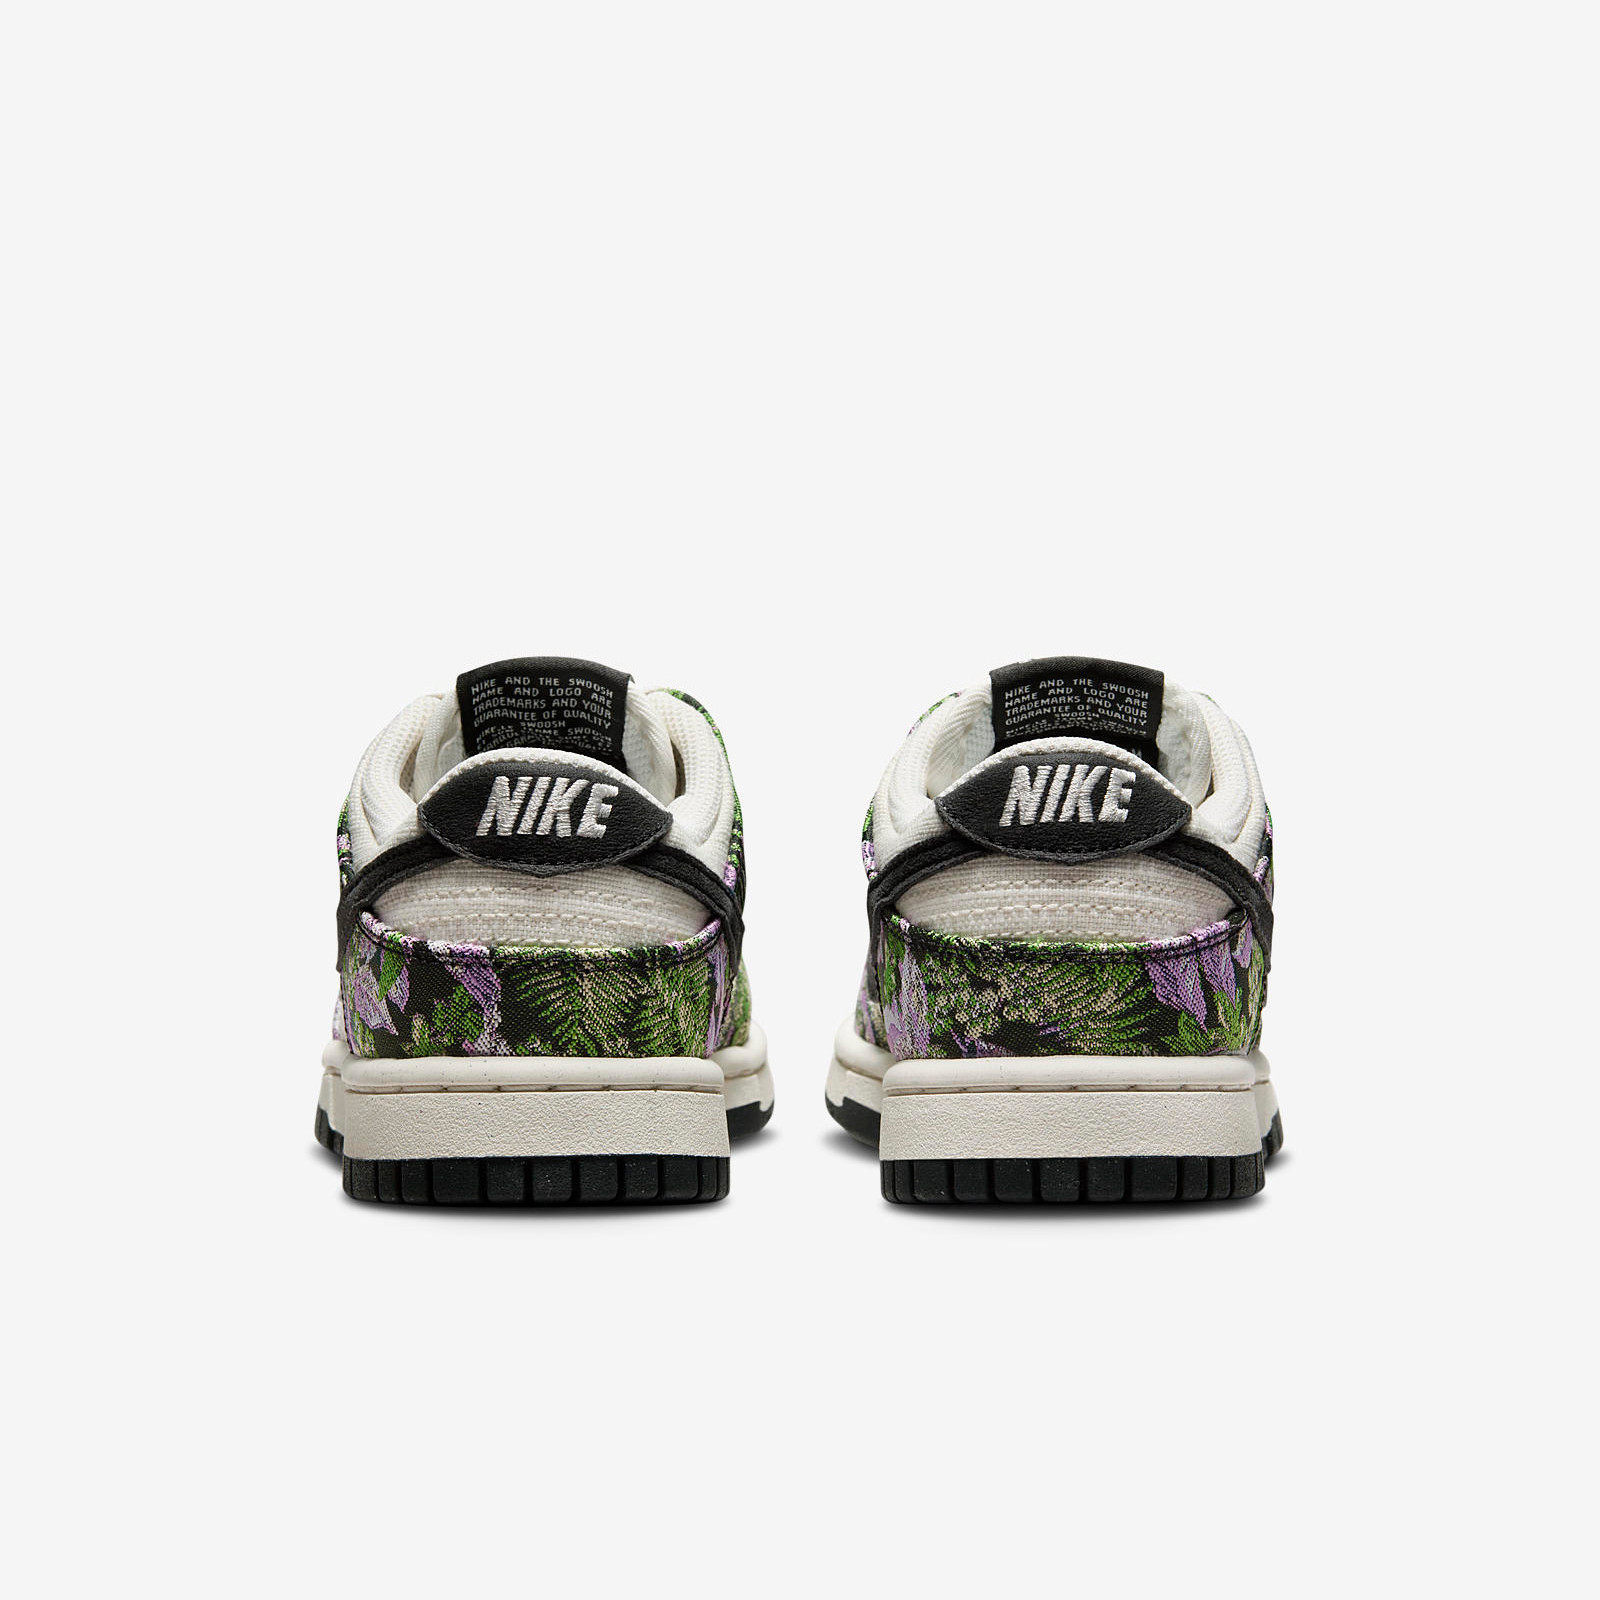 Nike Dunk Low
Next Nature
« Floral Print »